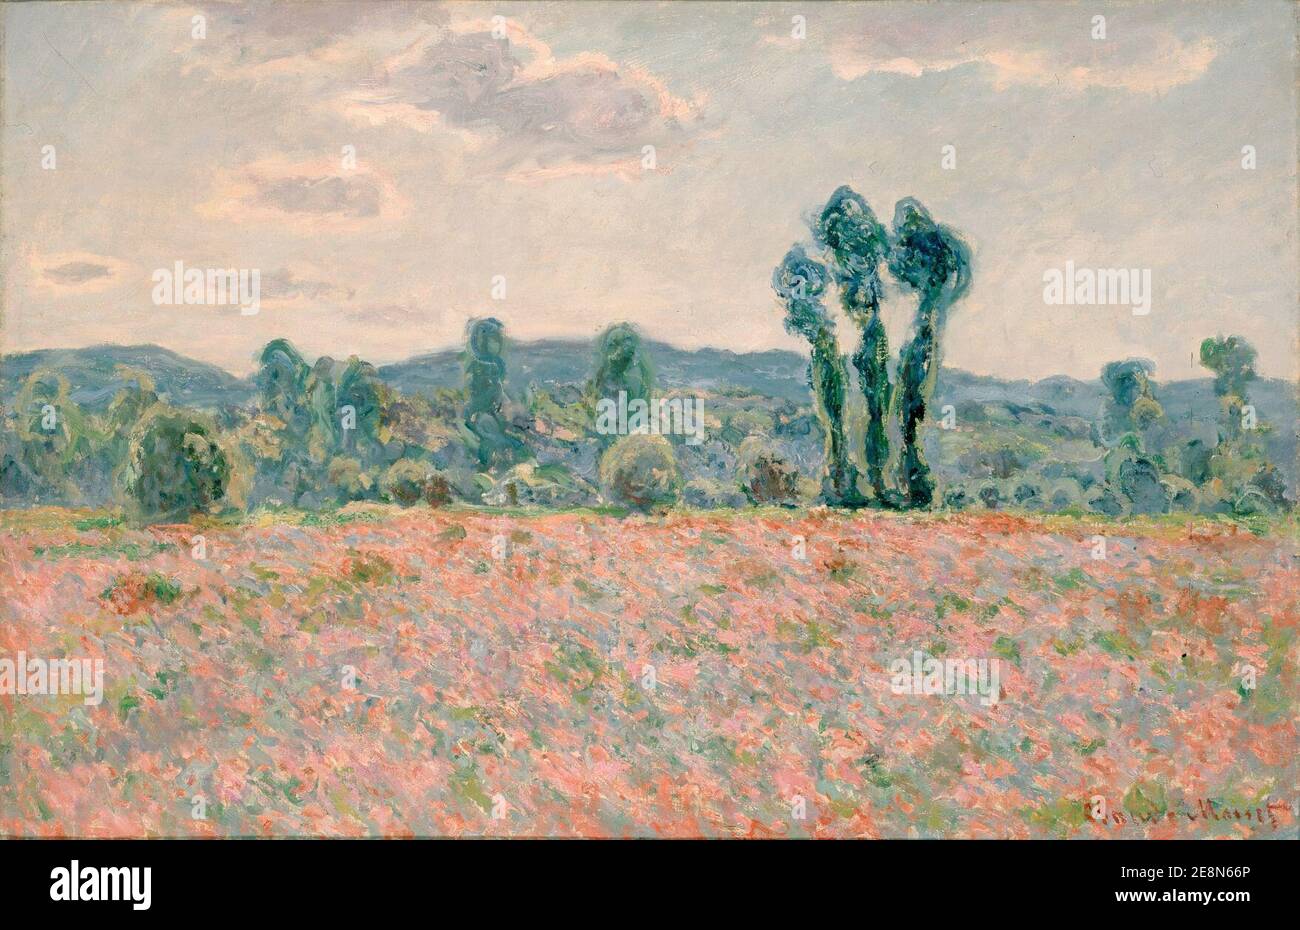 Monet, Claude - Poppy Field Stock Photo - Alamy